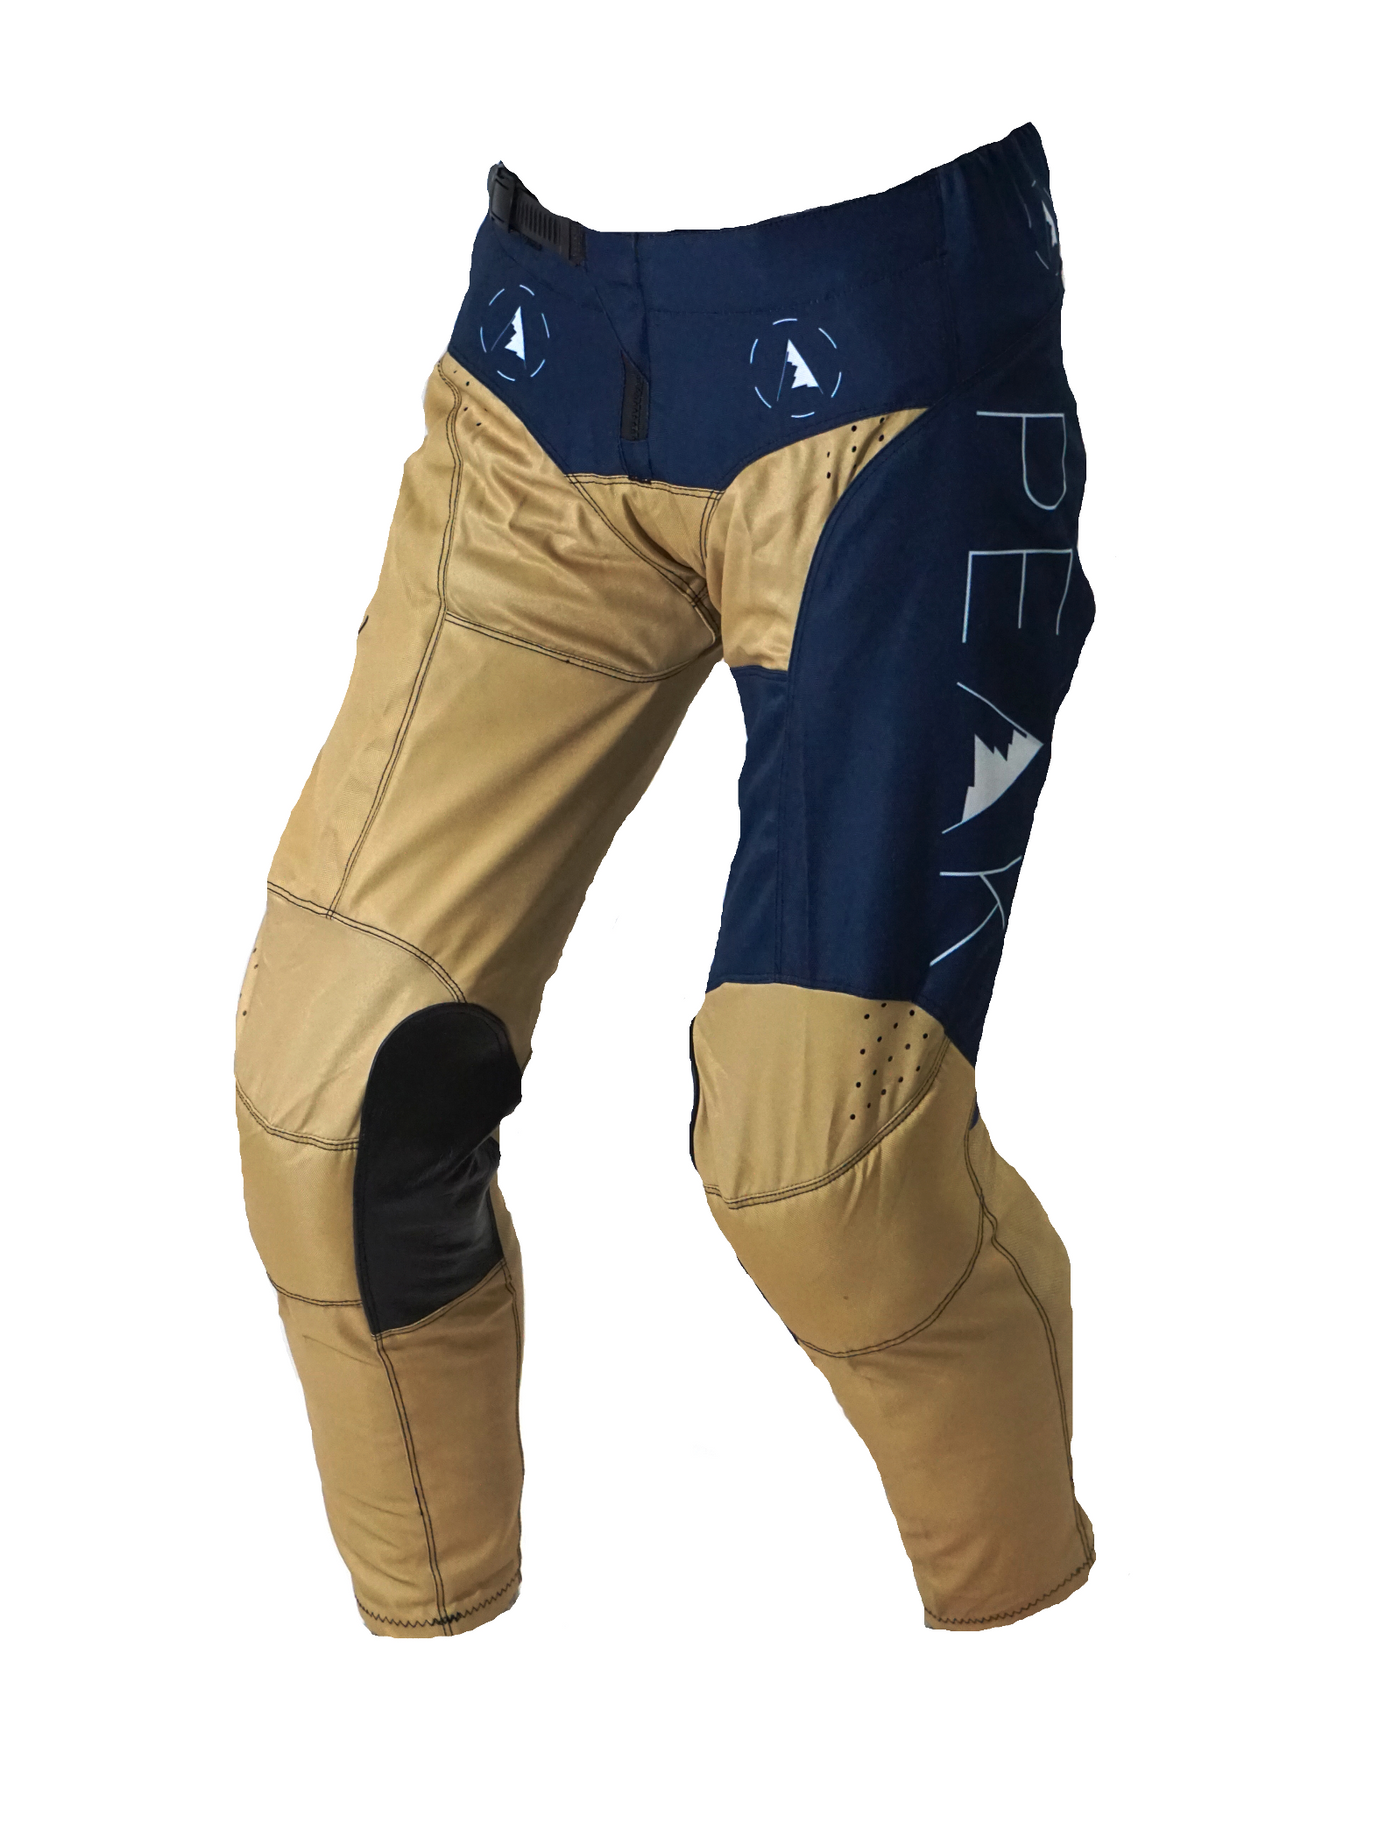 Pants Mx 22 - Beige and Navy Blue – PEAK Outerwear